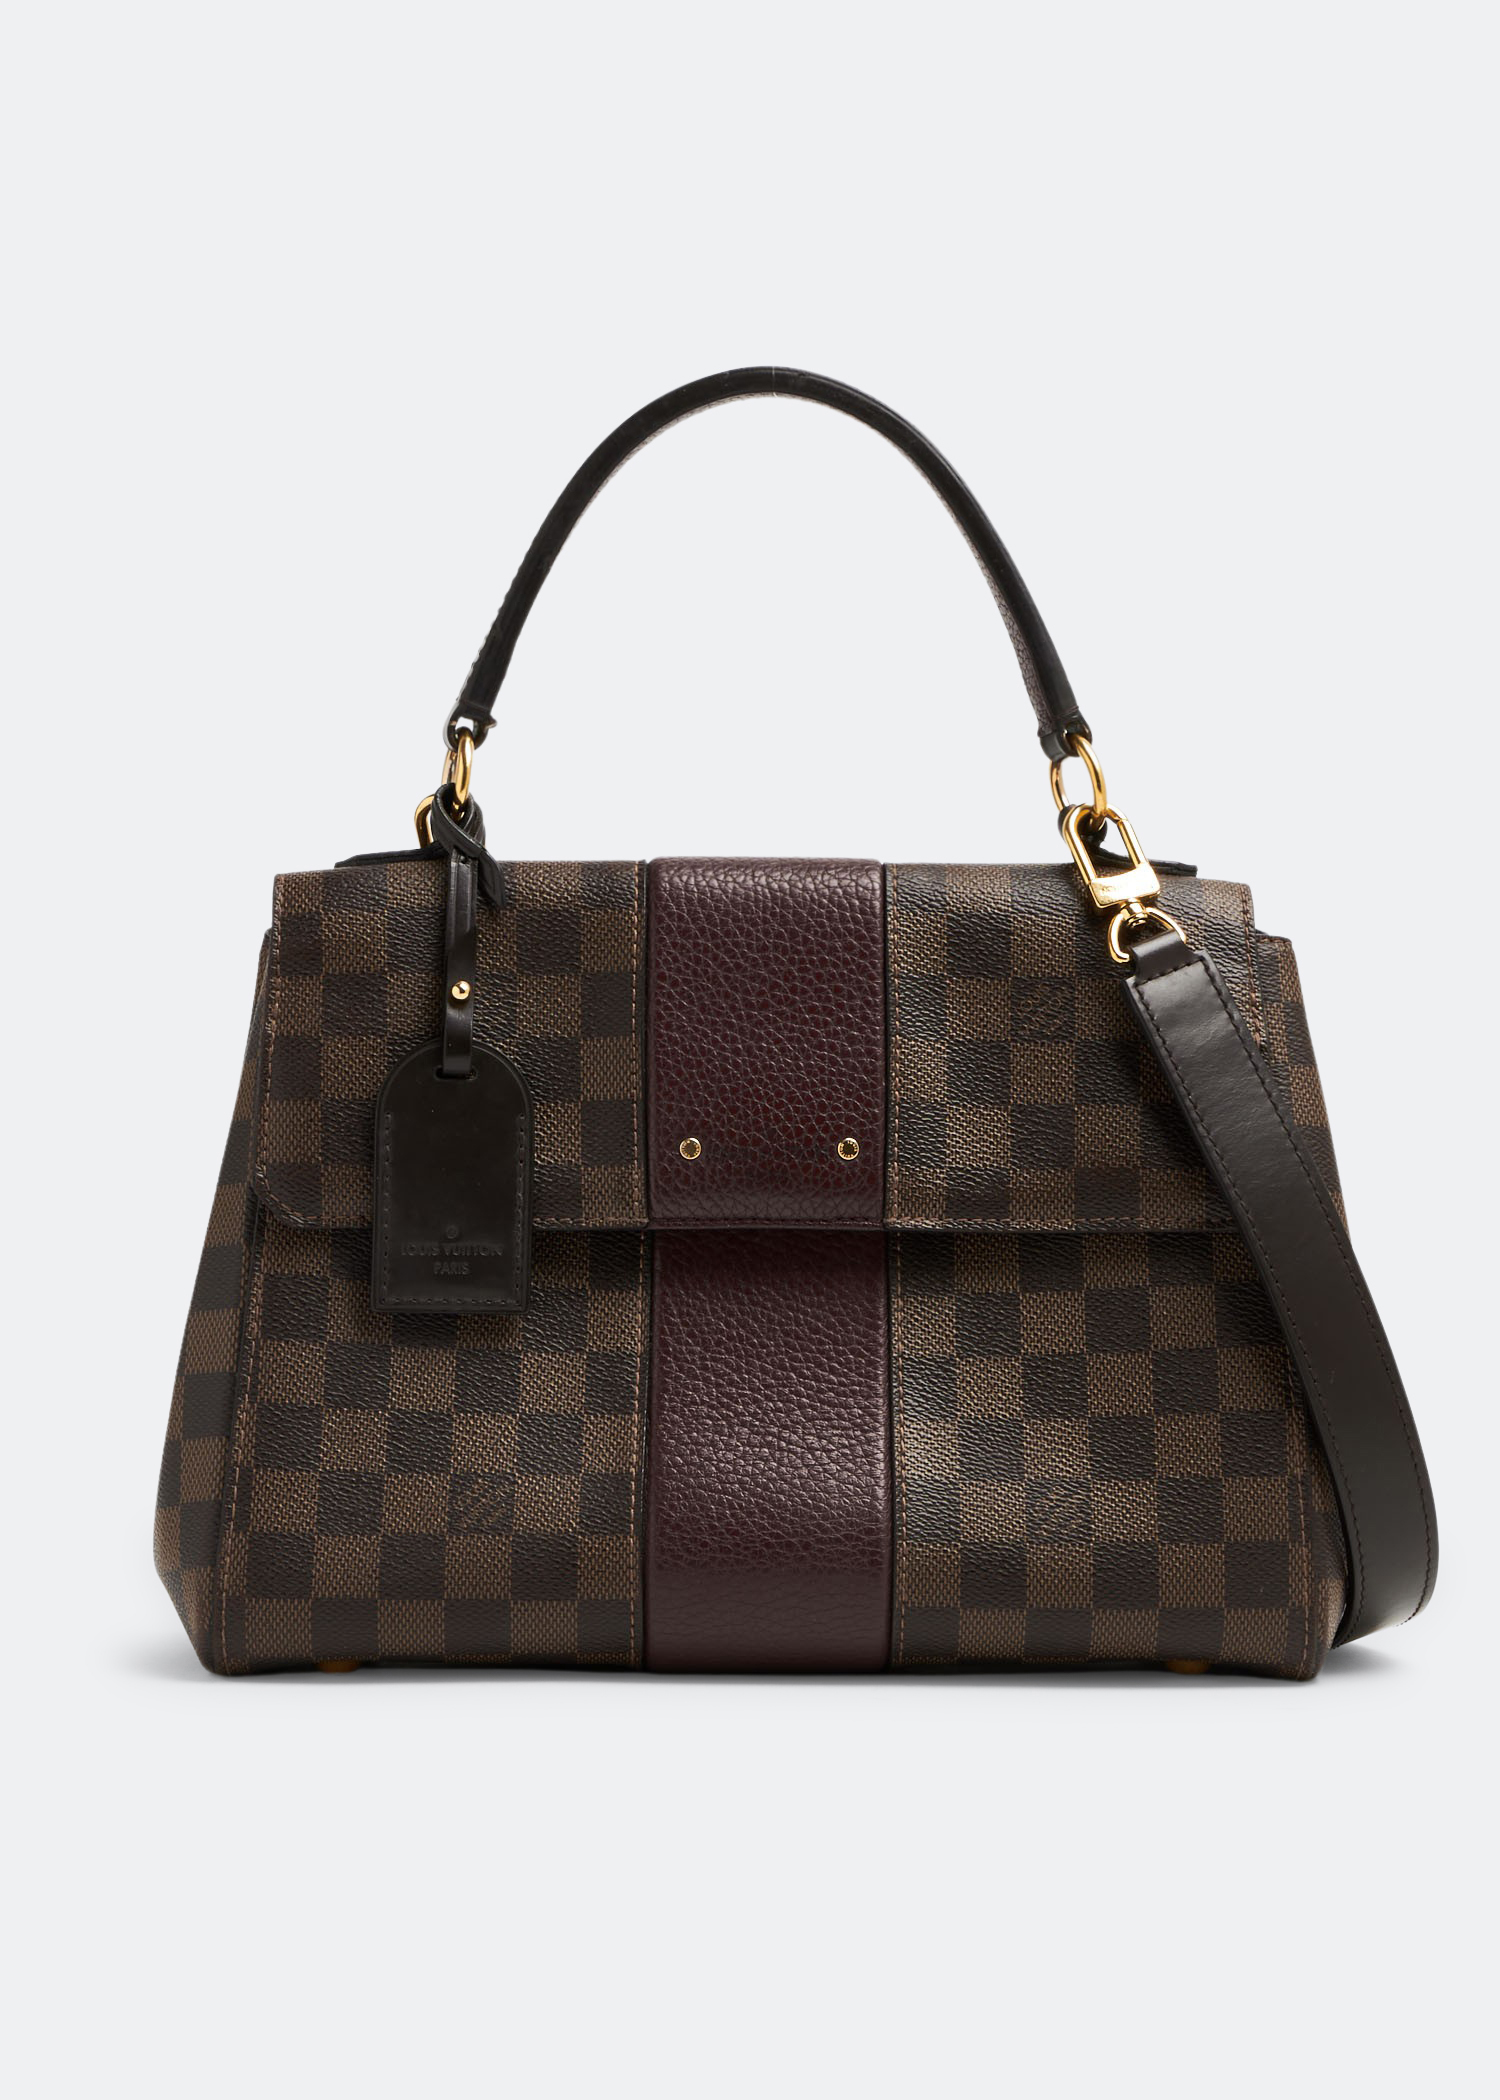 Louis Vuitton 2020 preowned Twist One PM handbag price in Dubai UAE   Compare Prices